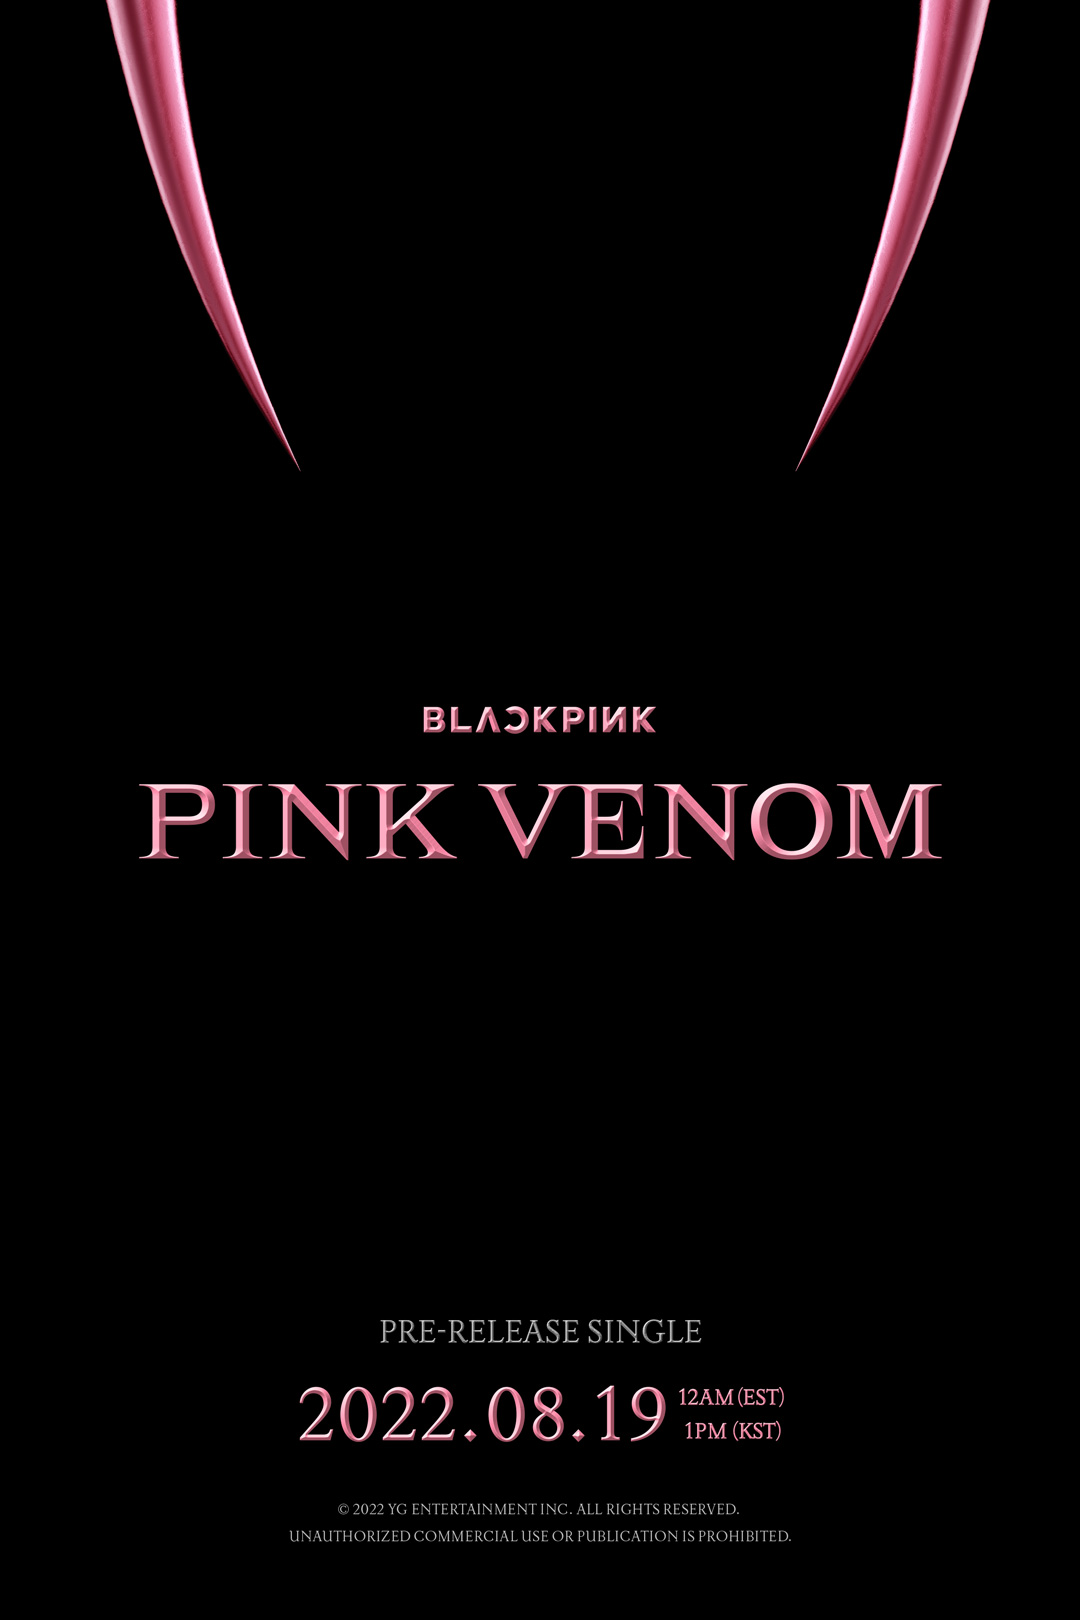 Blackpink's new single 'Pink Venom '